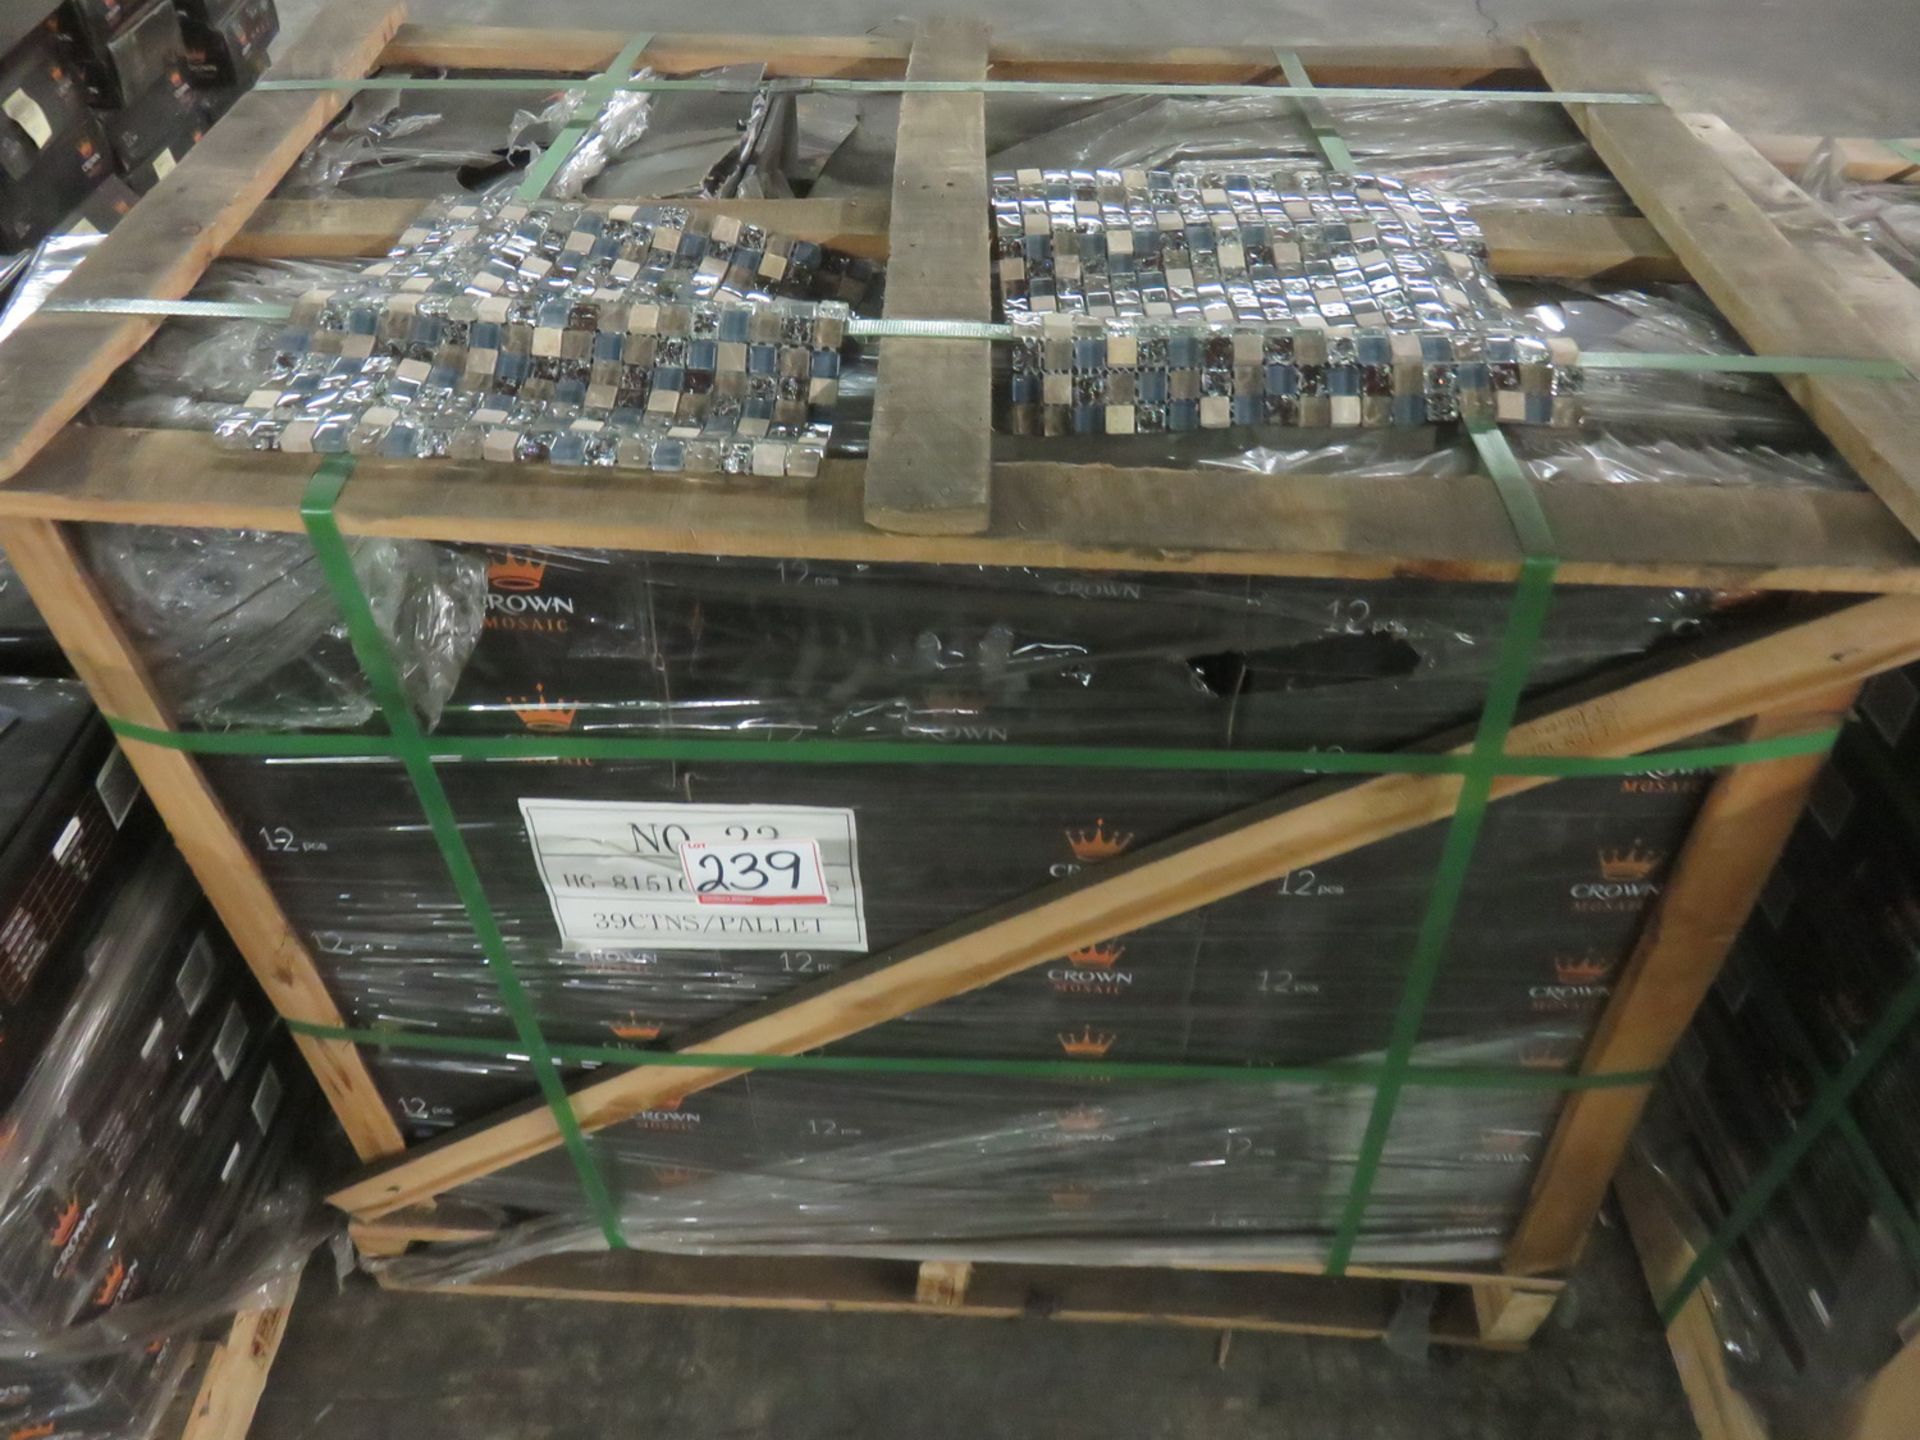 BOXES - CROWN HG815107 300 X 300 X 8MM MOSAIC TILES (12 PCS/BOX) - Image 3 of 3